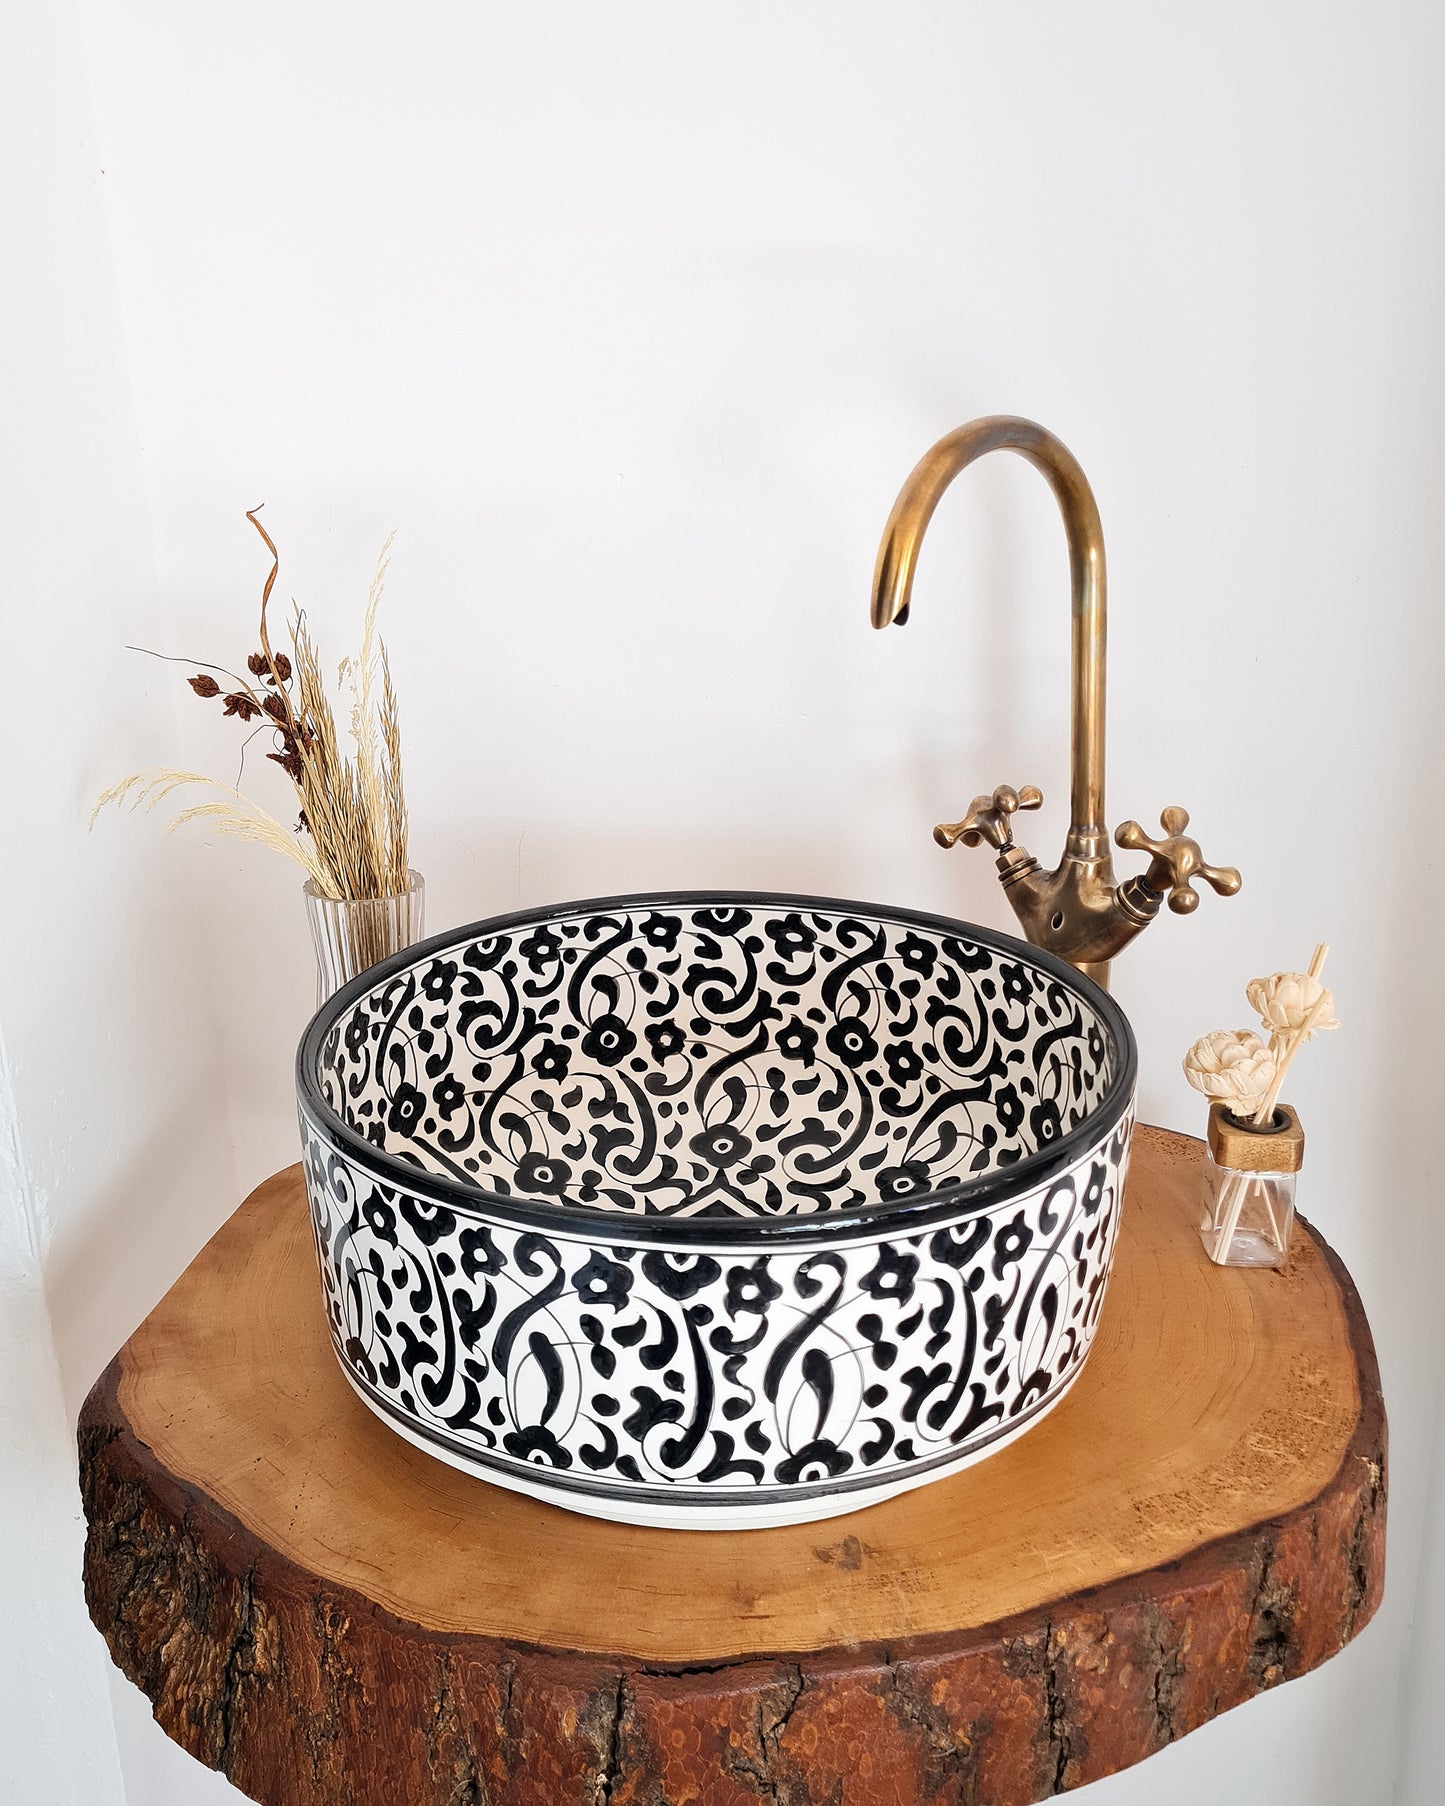 Custom Modern Bathroom Sink with Intricate Black Floral Patterns